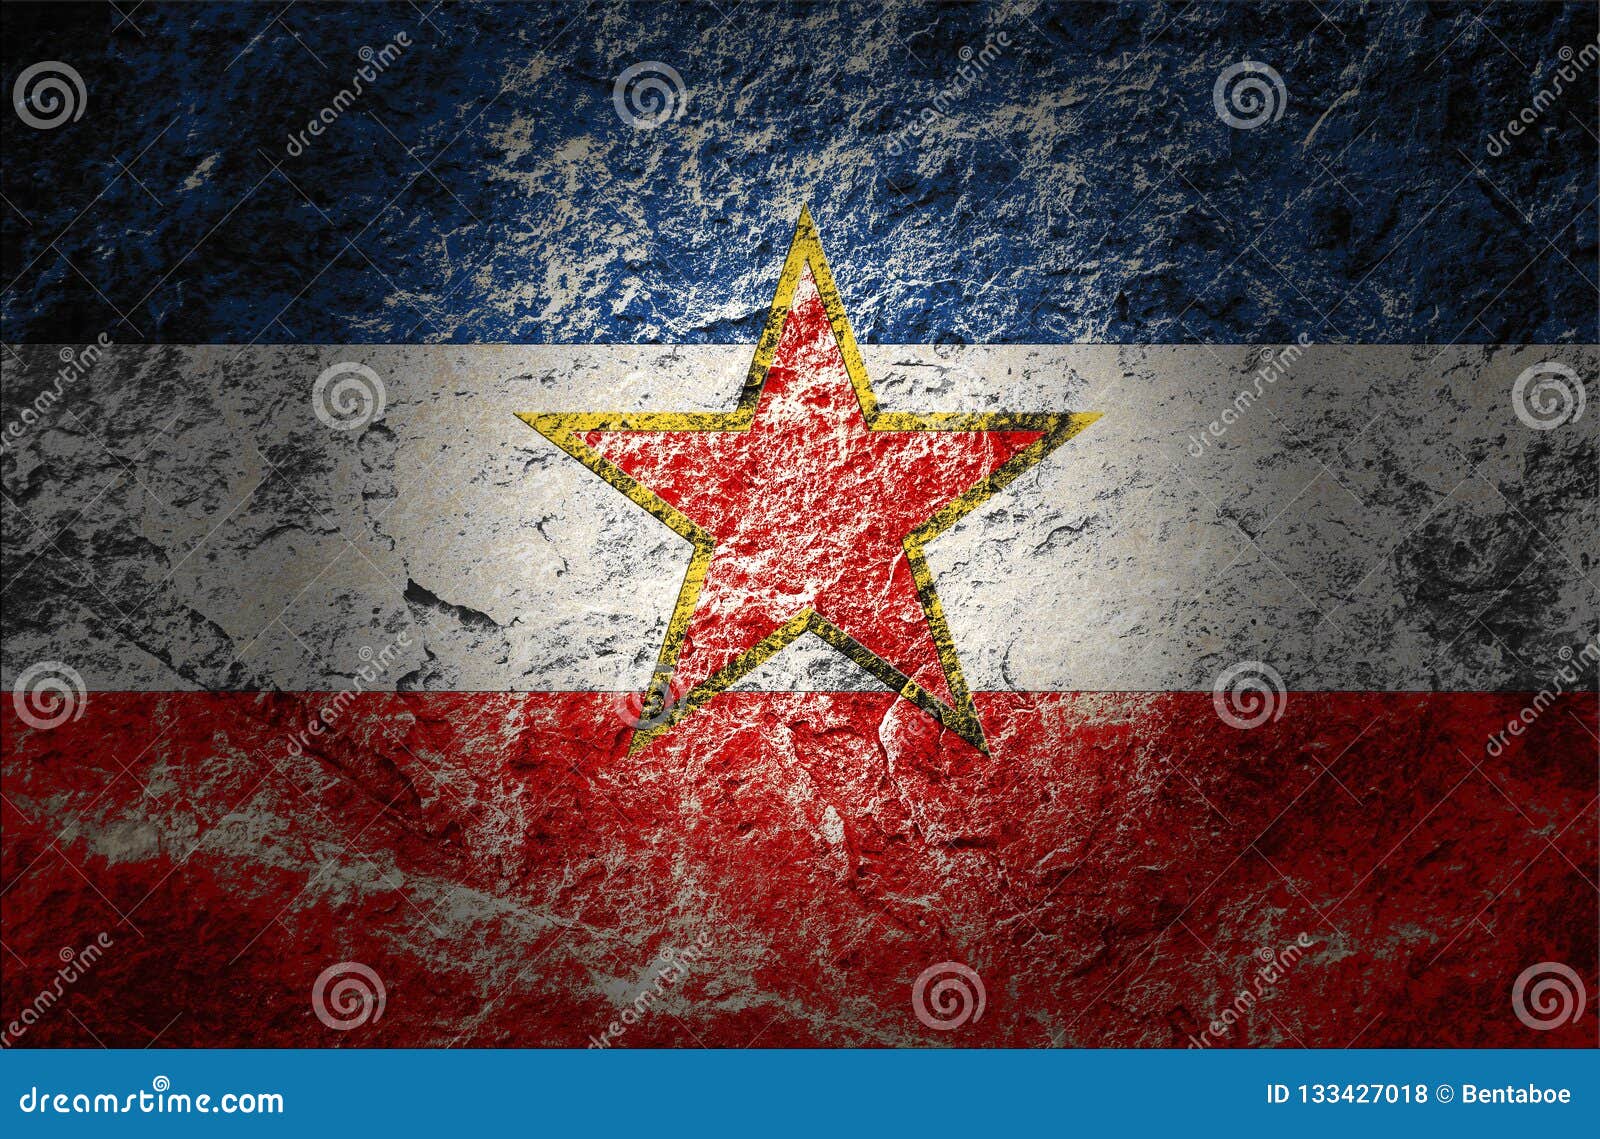 321 Yugoslavia Flag Wallpaper Images, Stock Photos & Vectors | Shutterstock